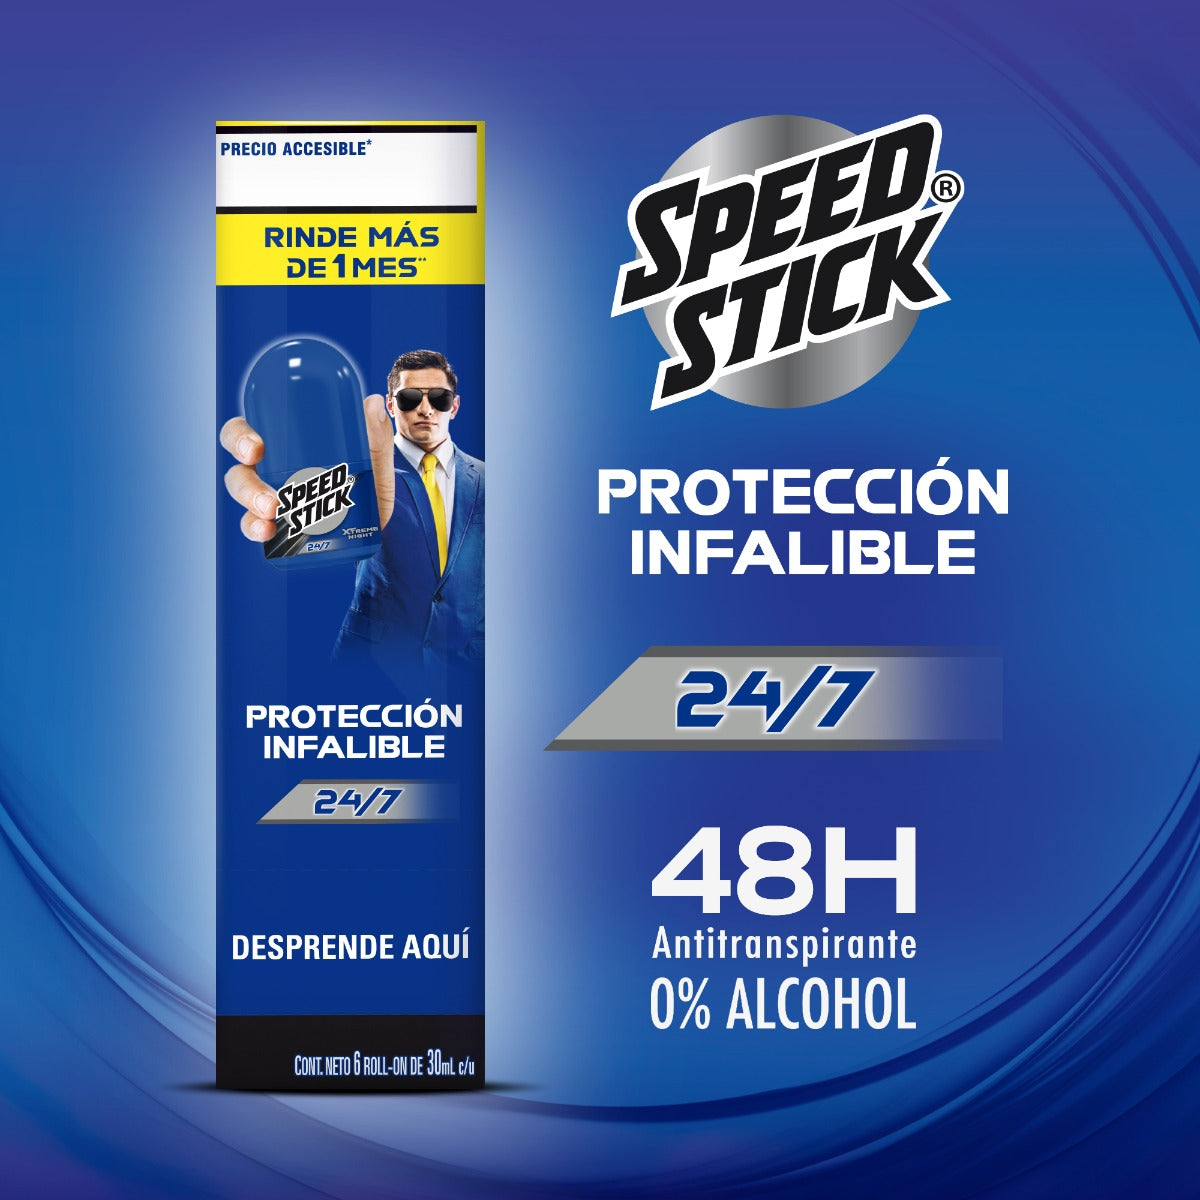 Antitranspirante Speed Stick 24/7 Cool Night en Roll On 30 ml